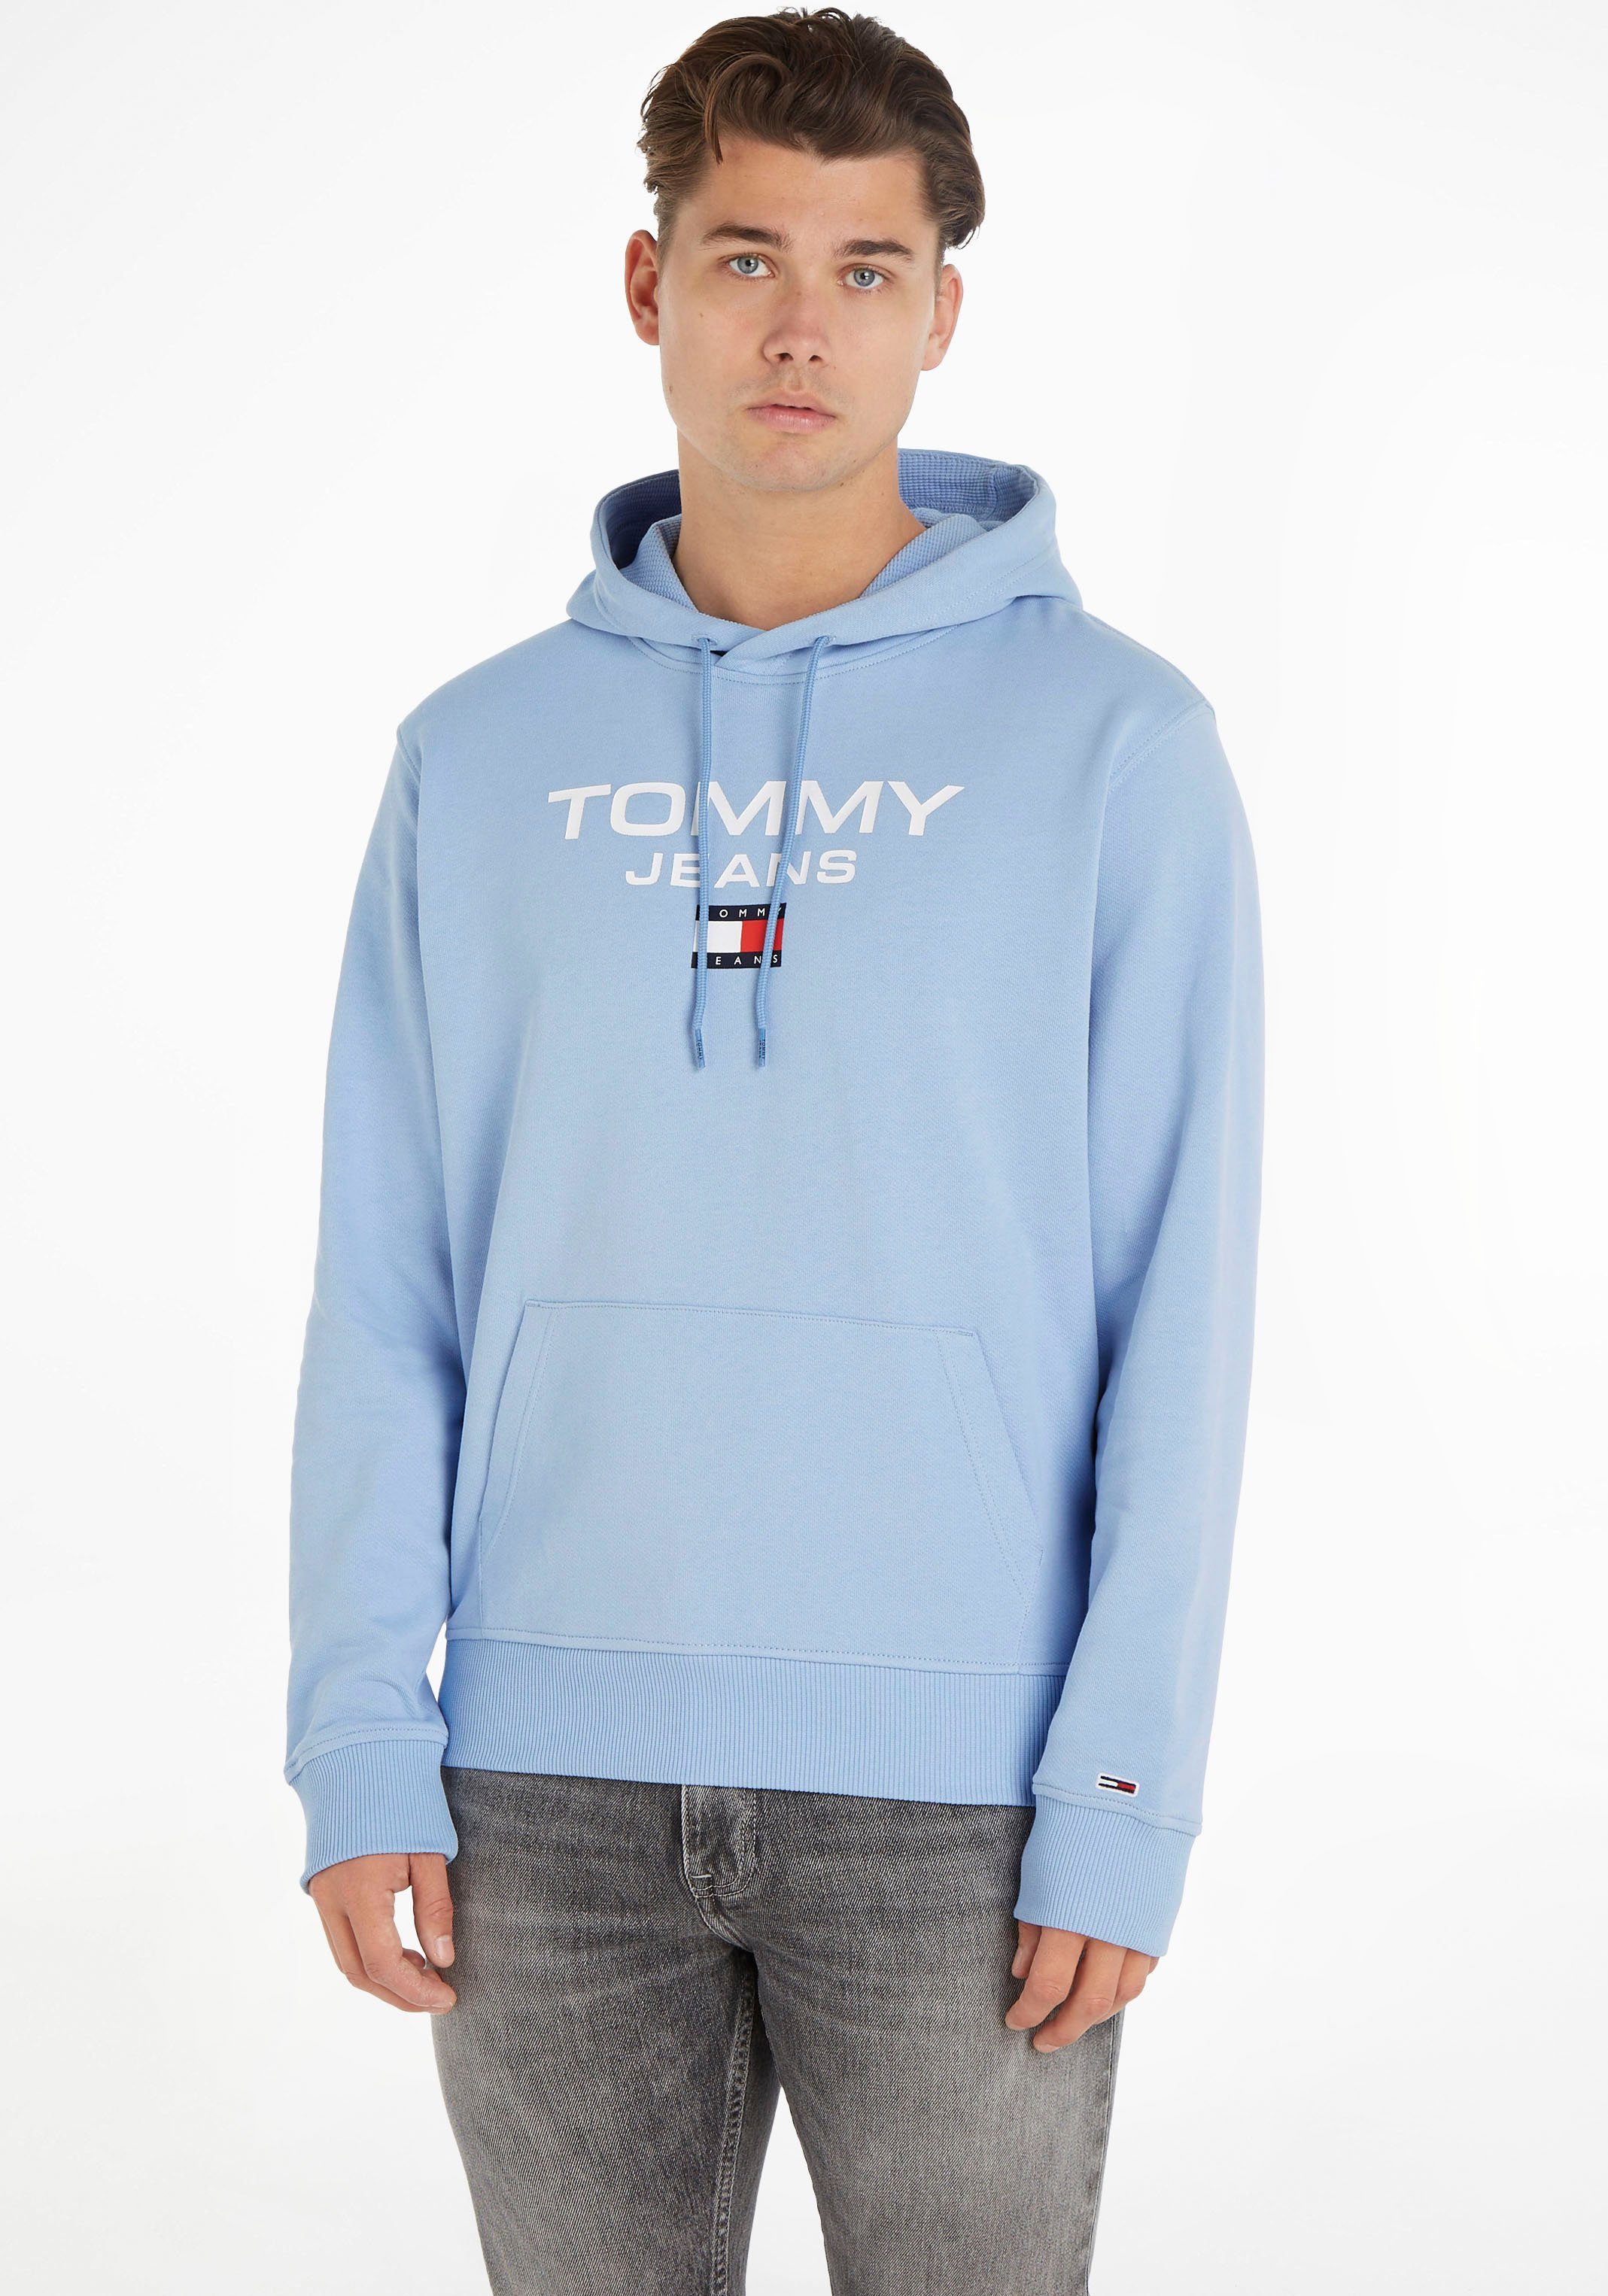 Tommy mit Jeans REG Pearly ENTRY HOODIE Kapuzensweatshirt Logodruck Blue TJM